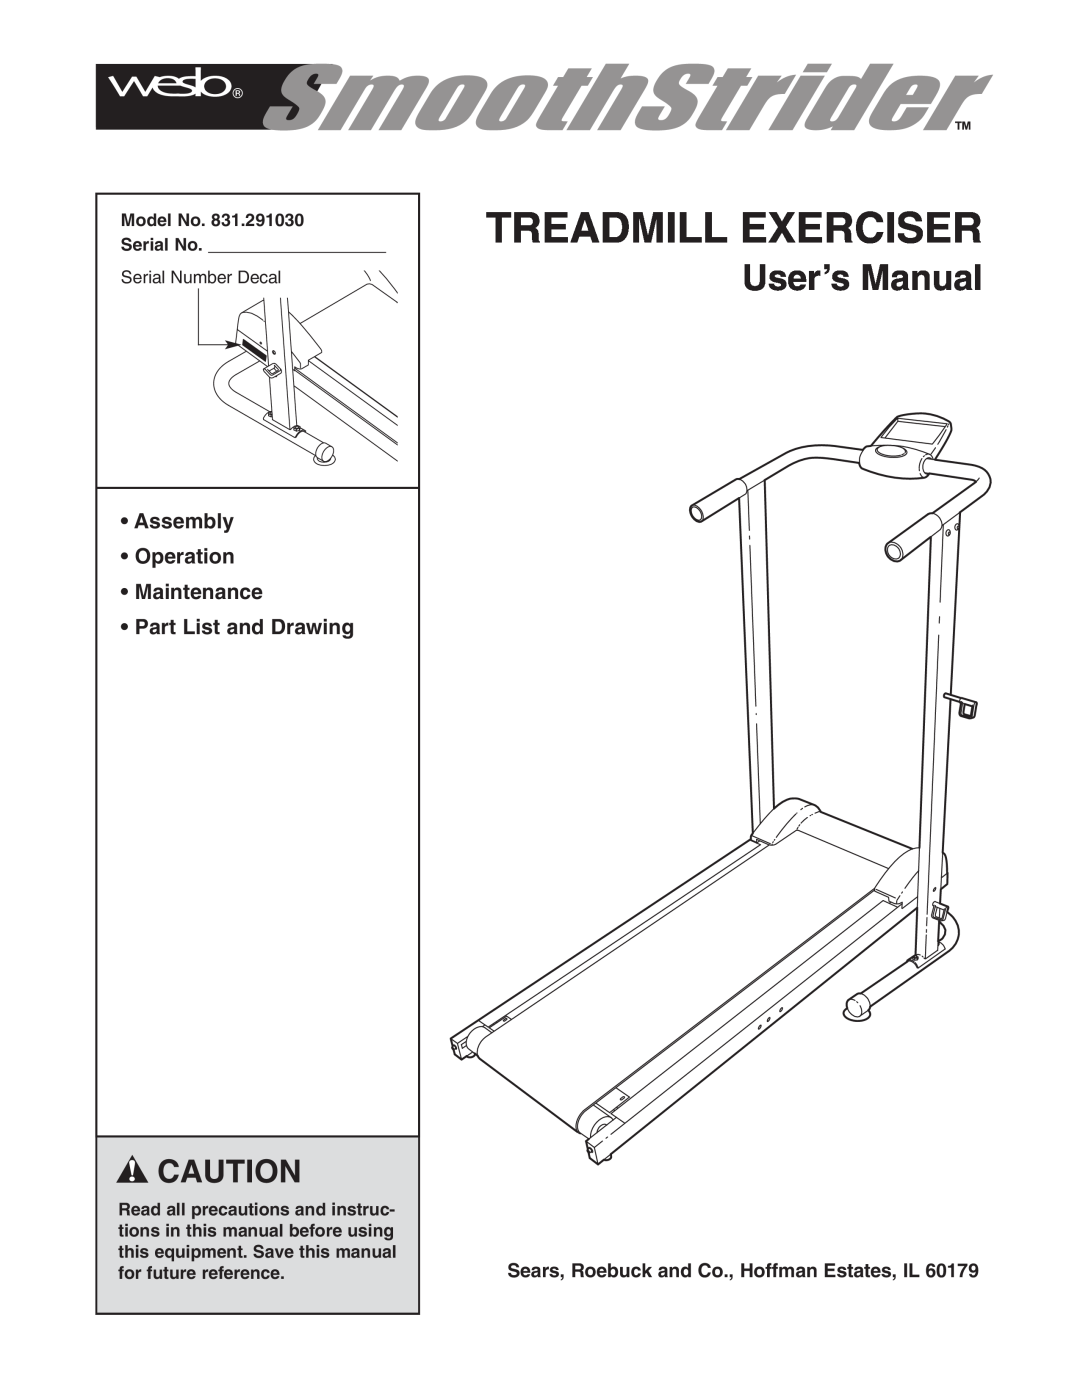 Weslo 831.291030 user manual Model No Serial No, Treadmill Exerciser, User’s Manual 